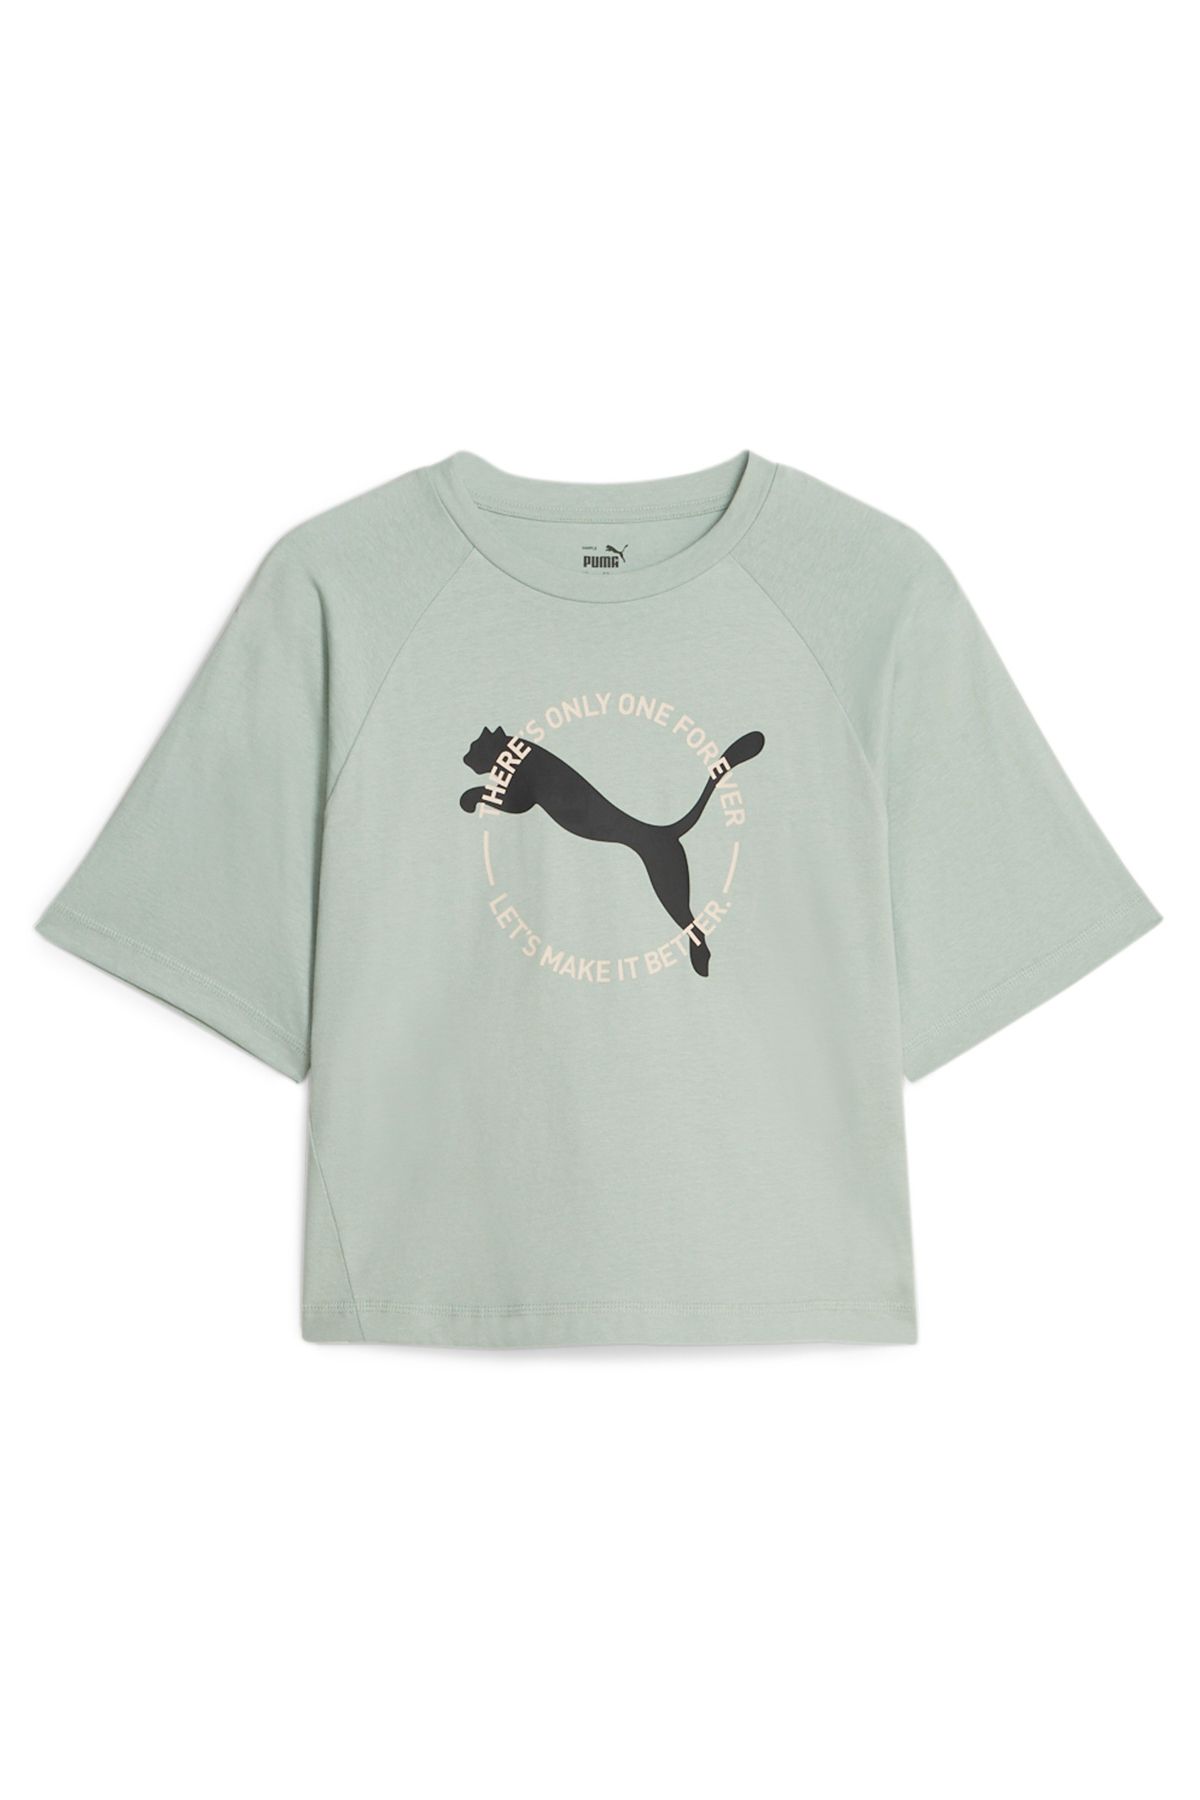 Puma T-Shirt Female green - Trendyol